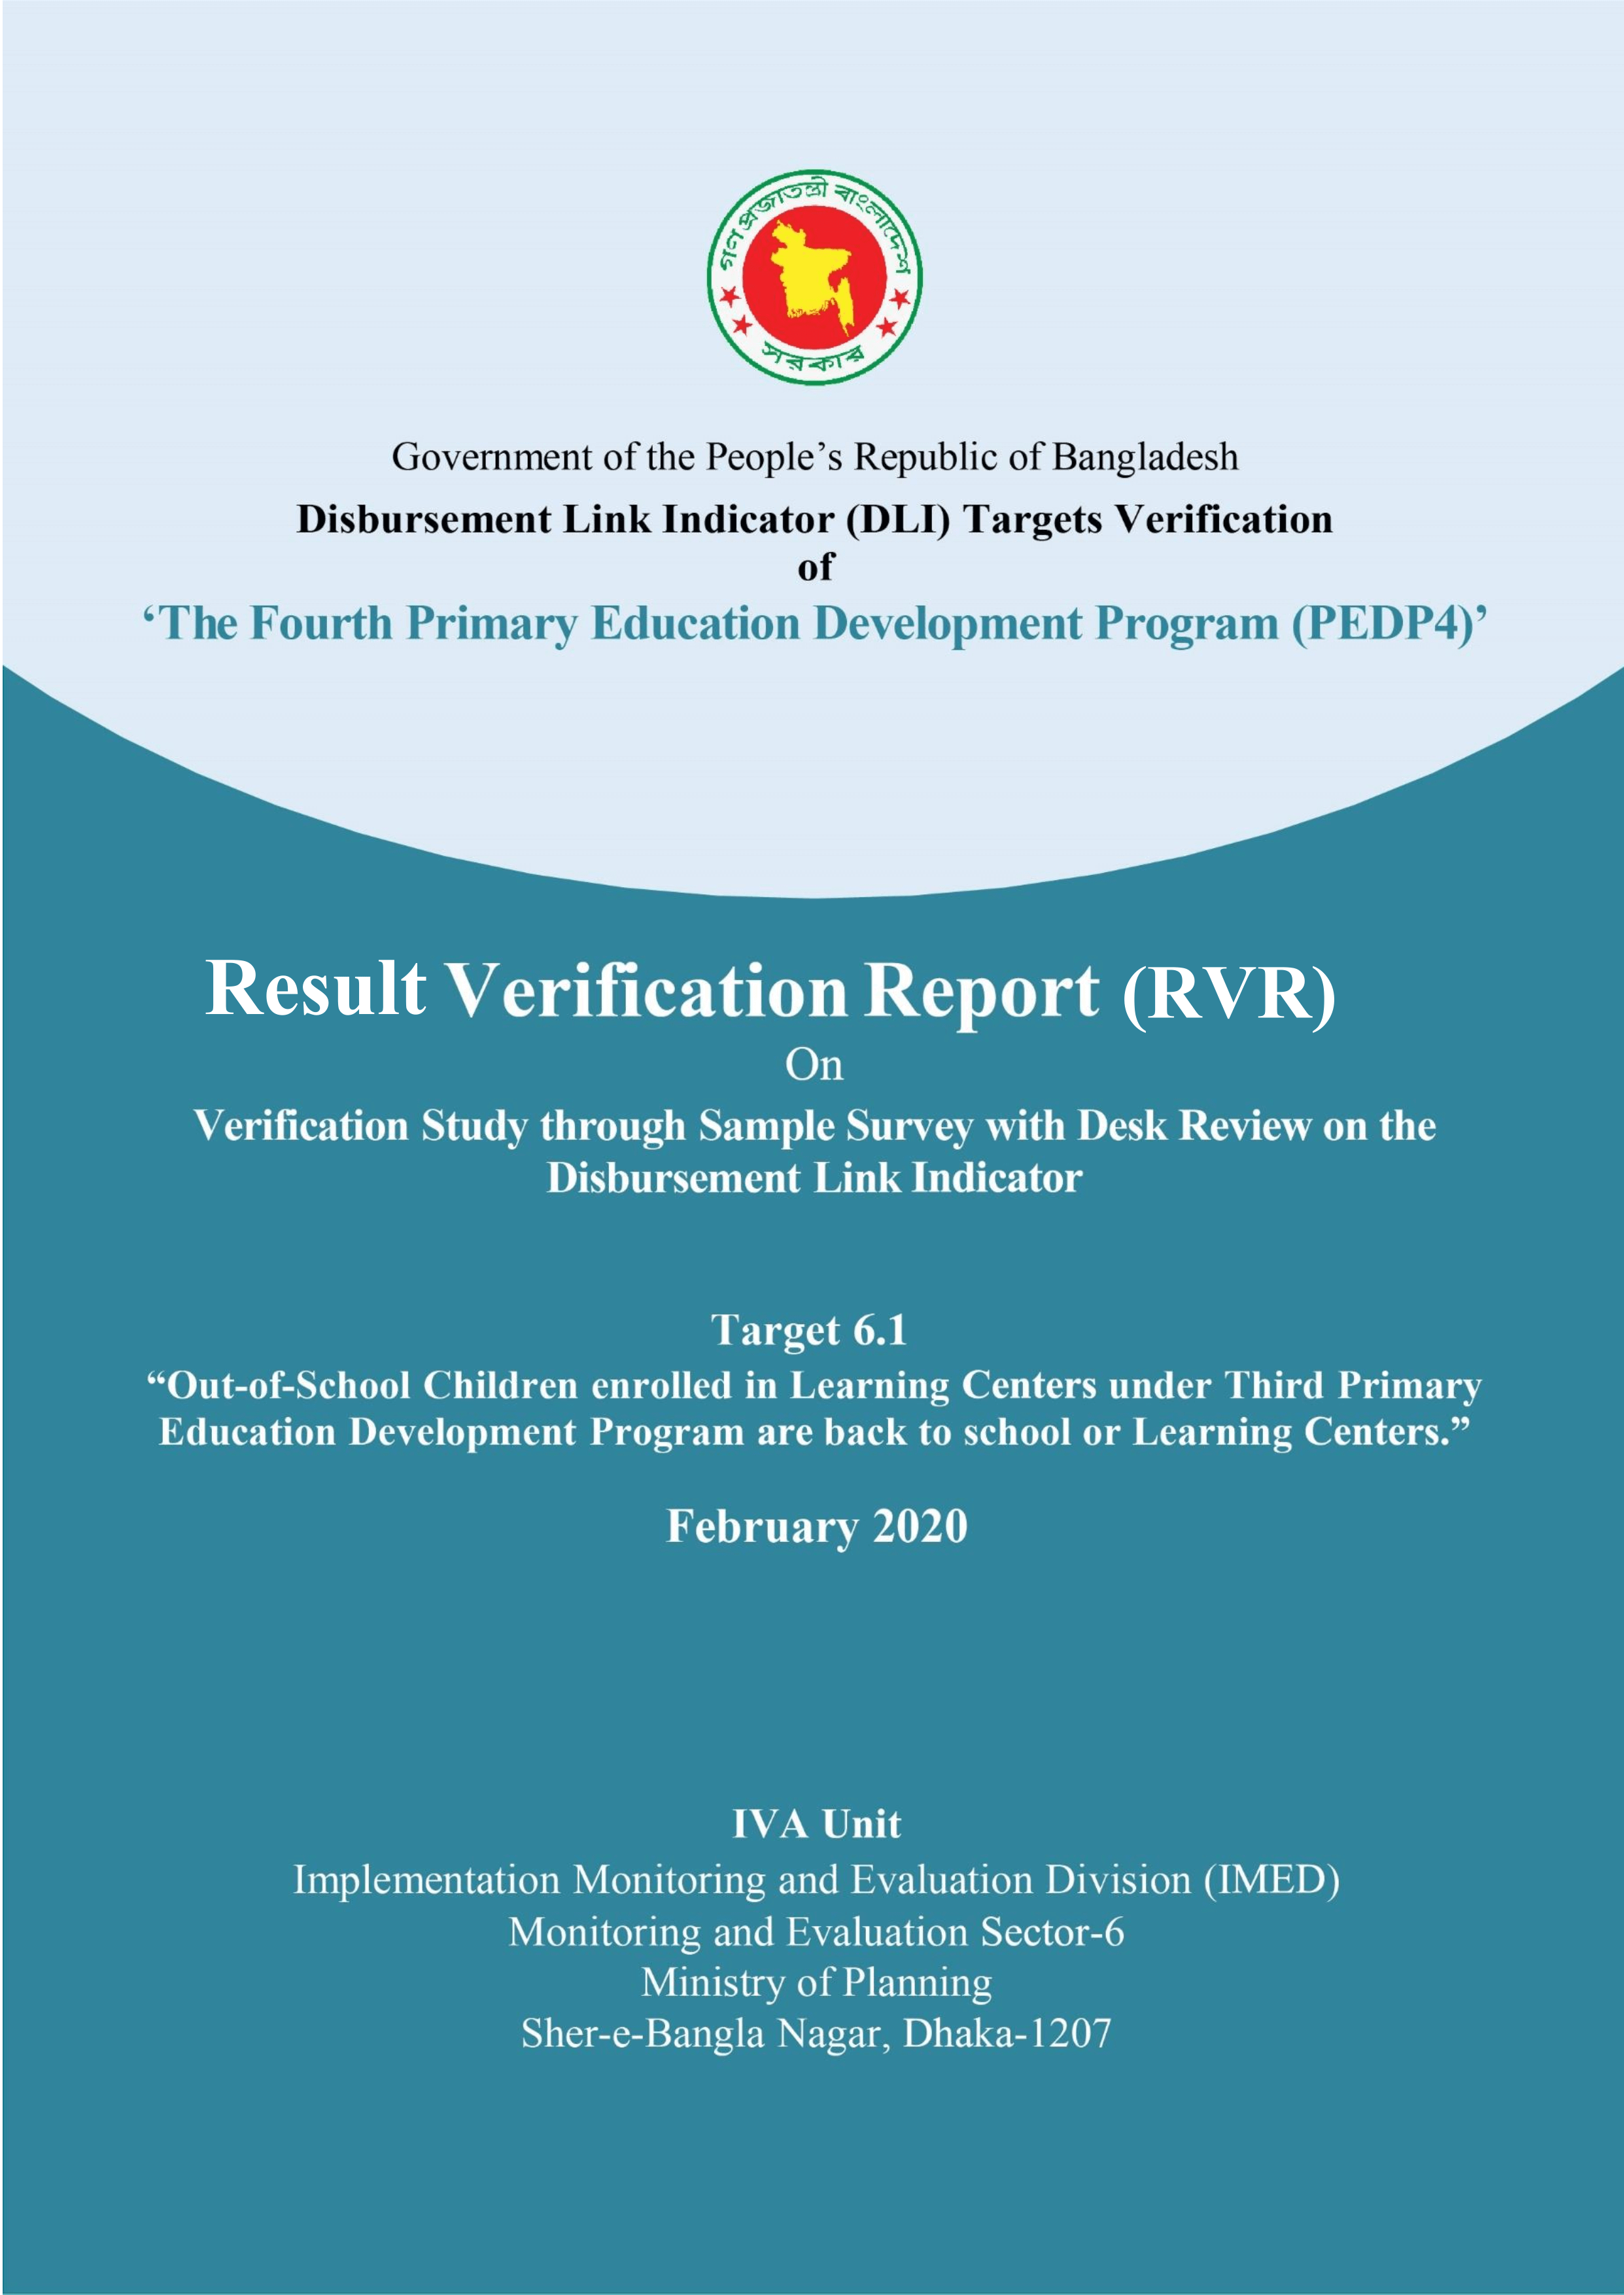 IMED_DLI 6.1_Verification Report_English